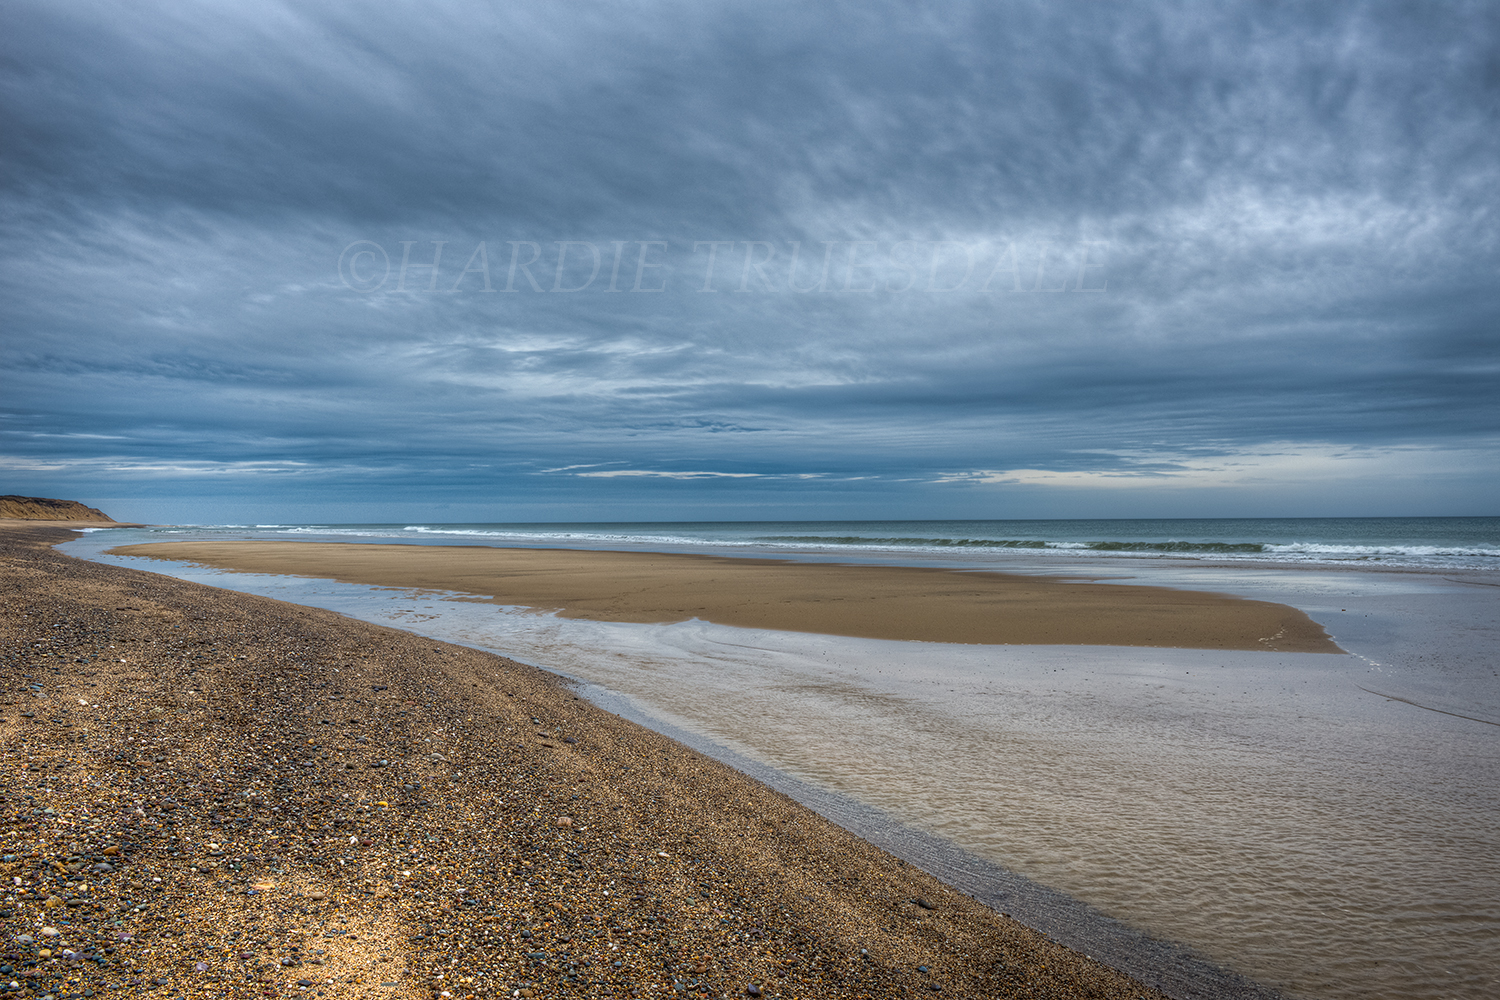 CC#105 "Stormy Day, Marconi Beach, Cape Cod National Seashore"